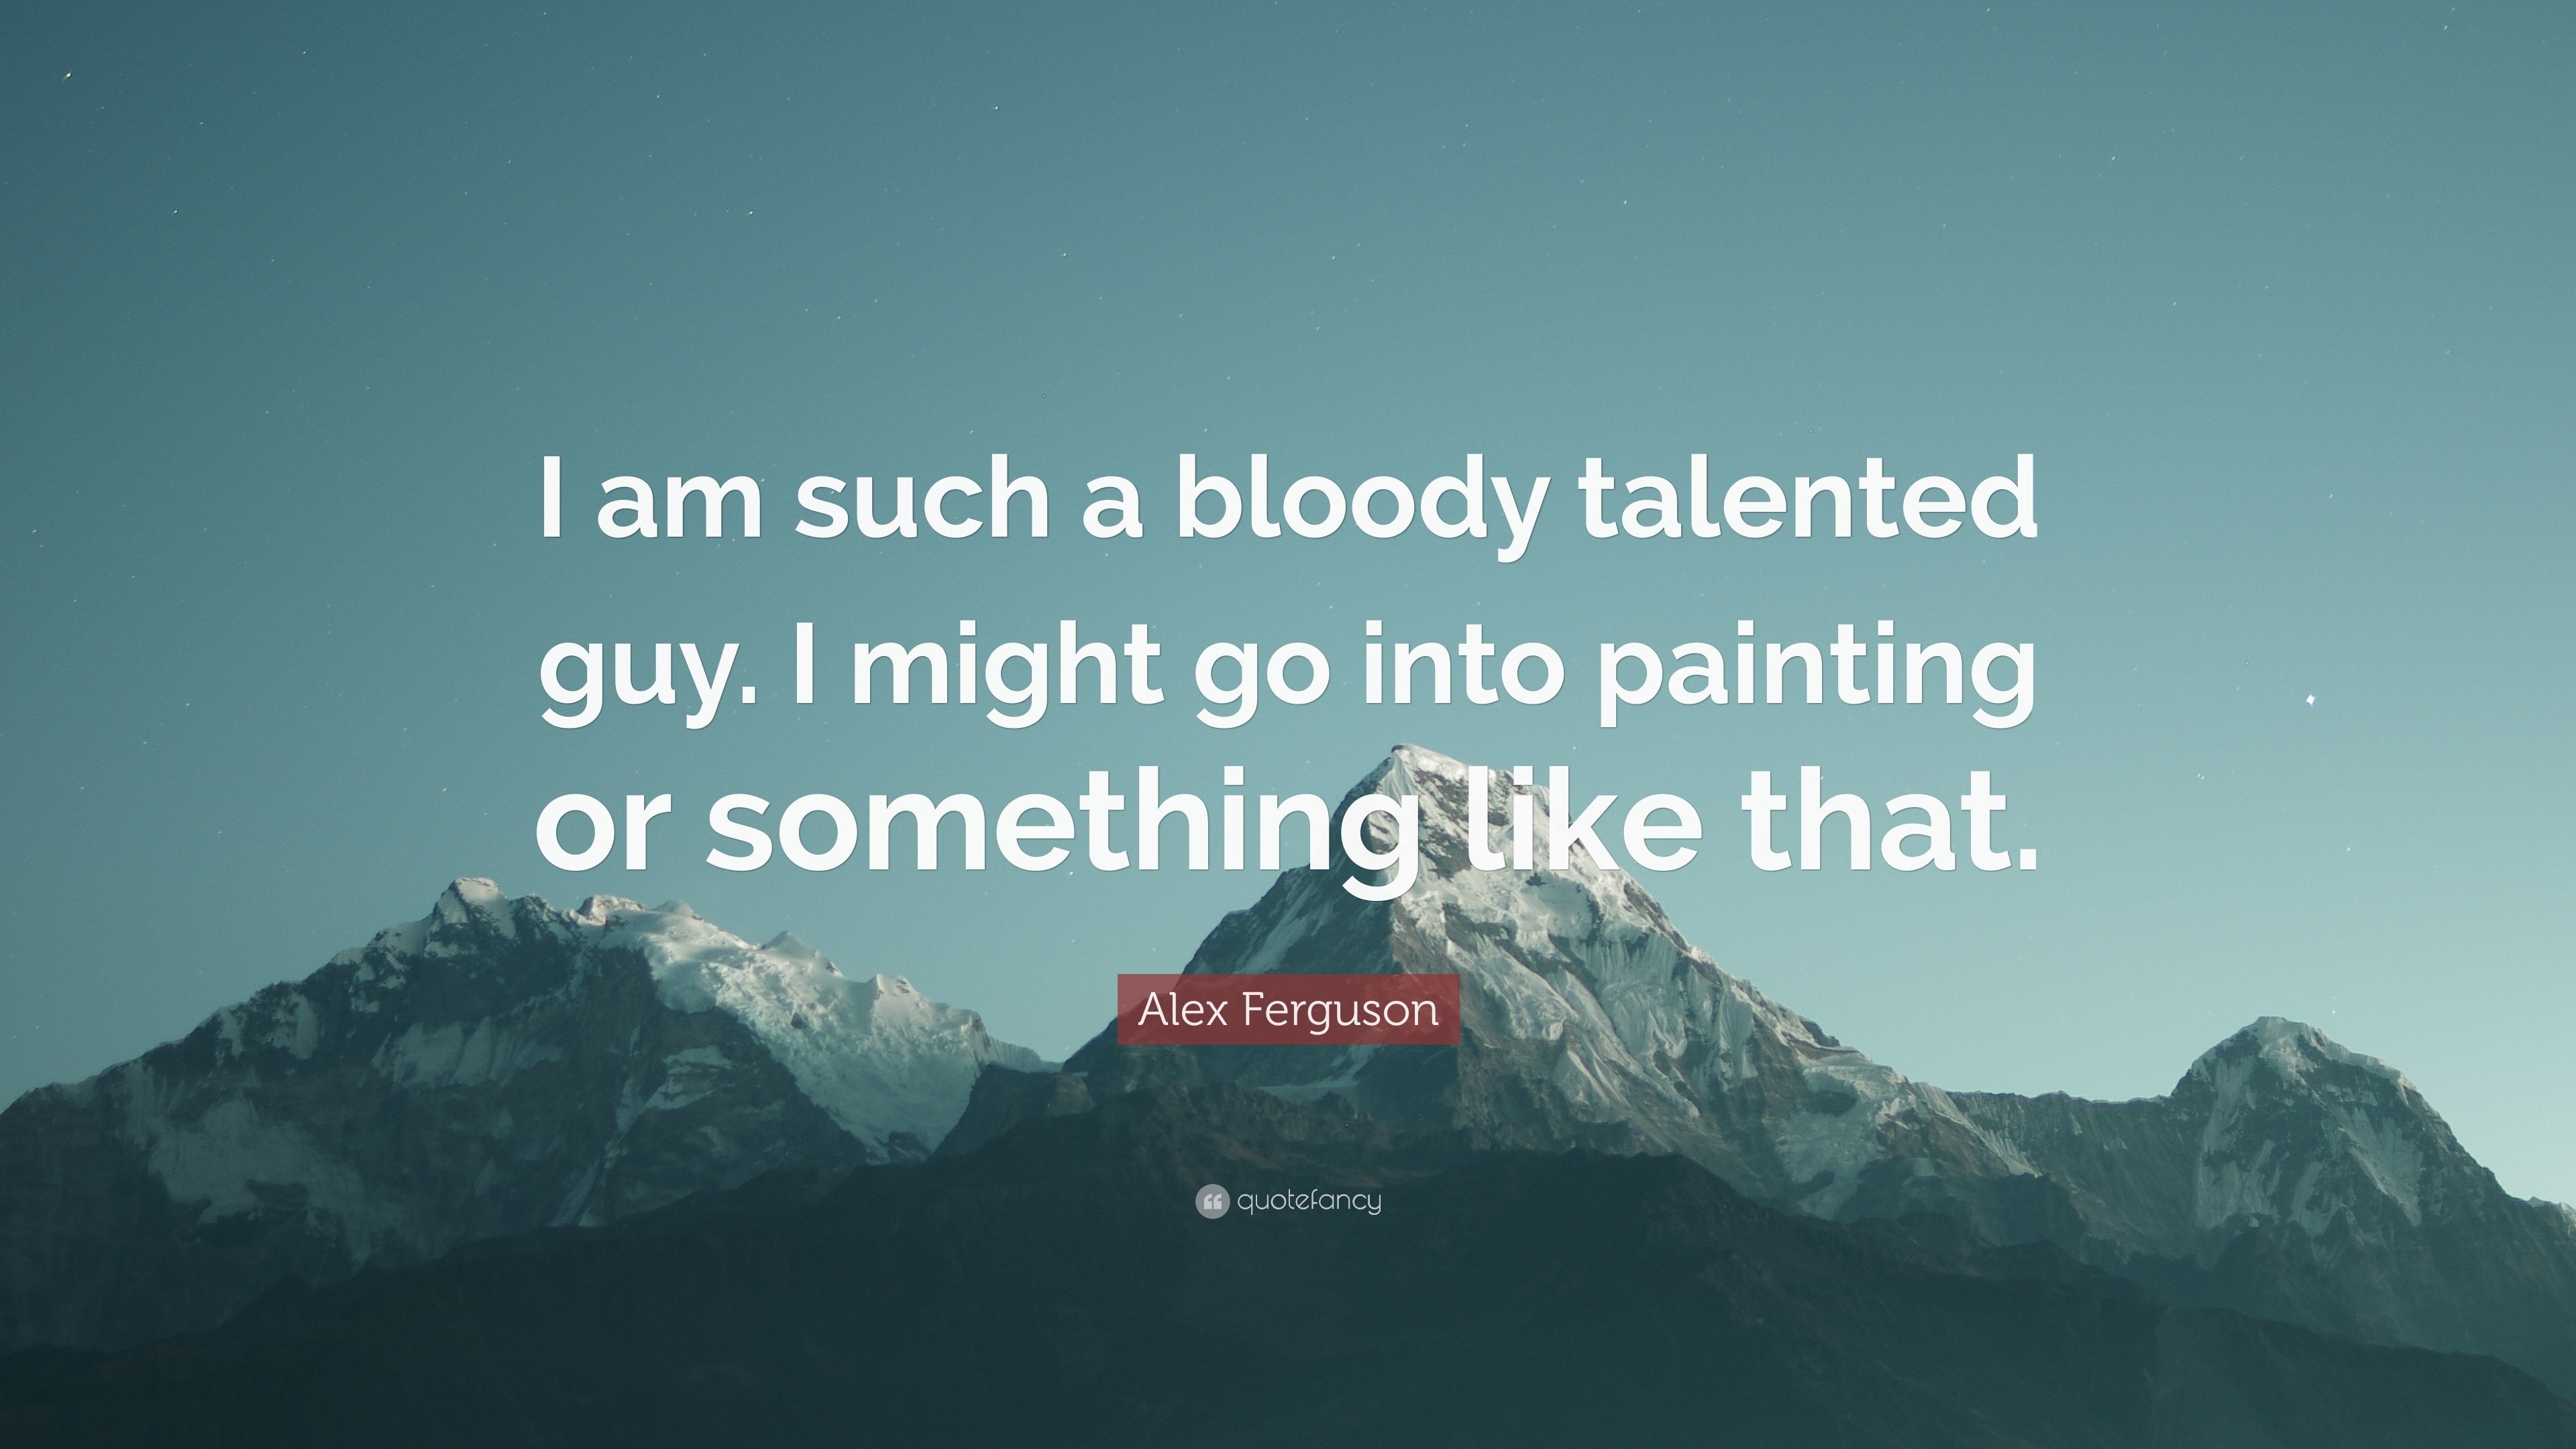 3840x2160 Alex Ferguson Quote: “I am such a bloody talented guy. I might go